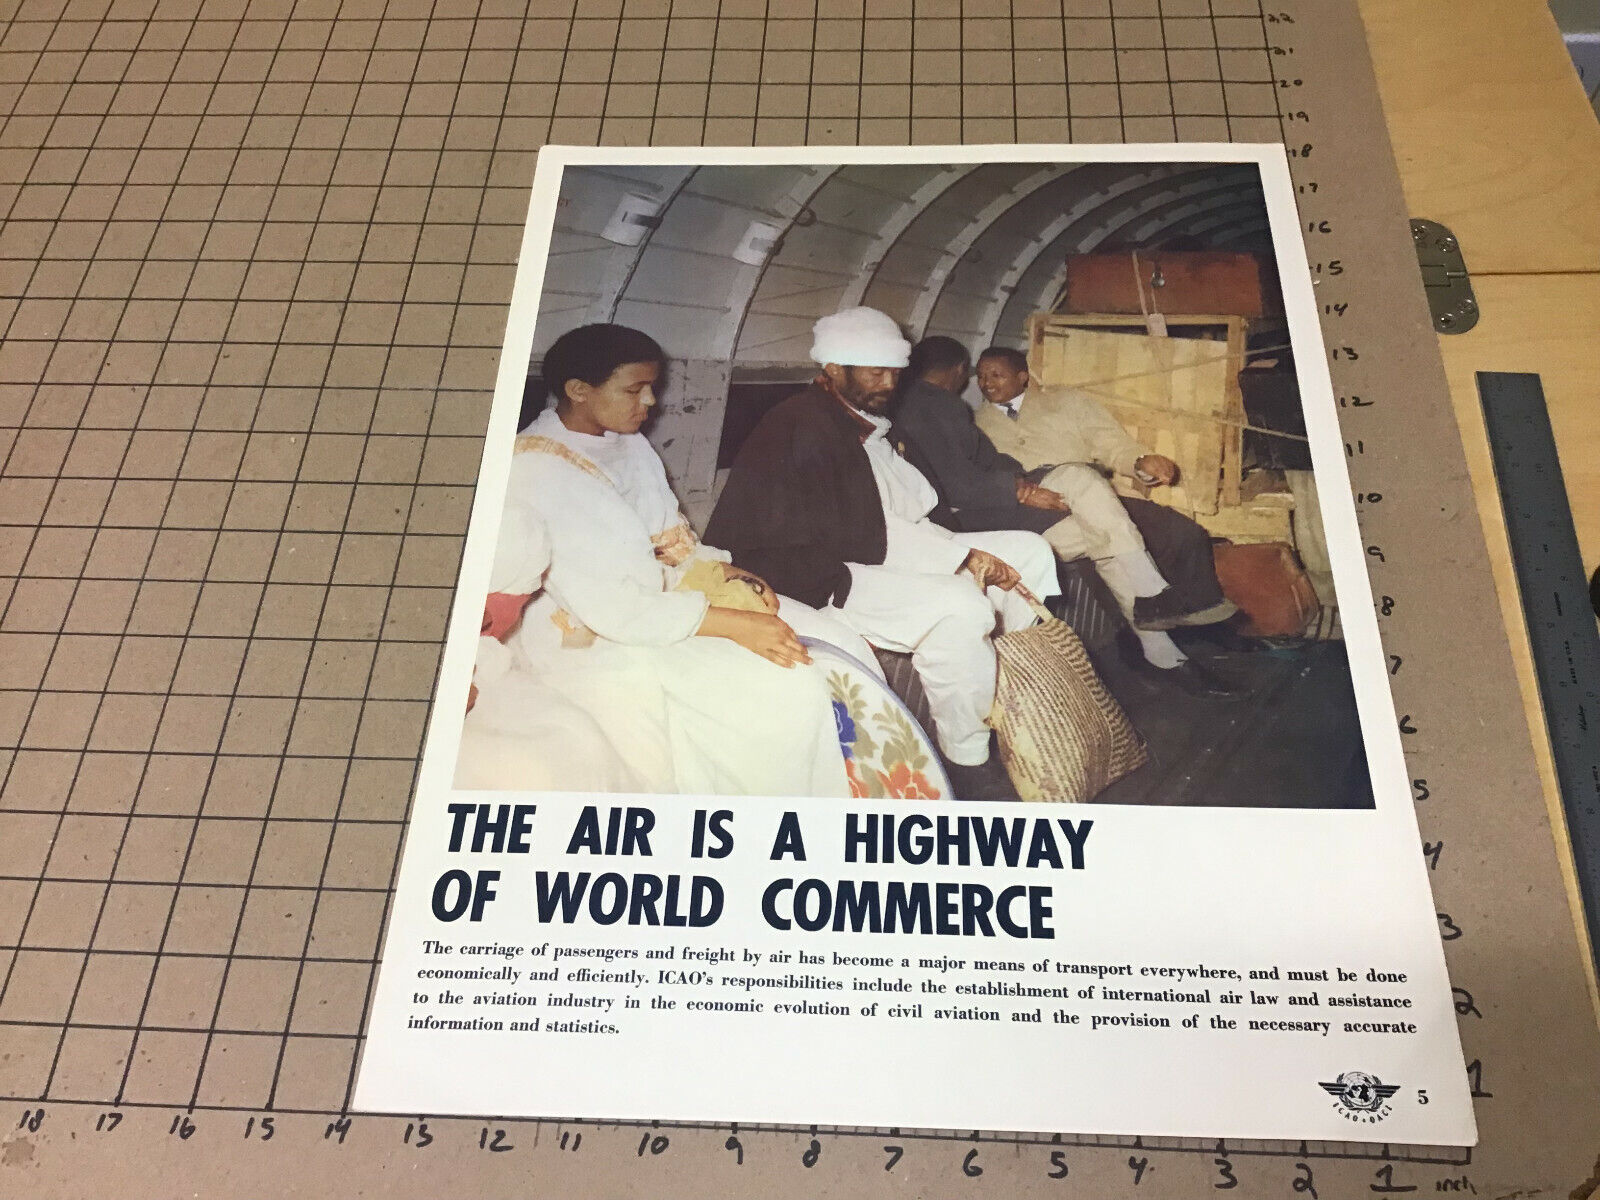 original 1956 international civil aviation organization Poster: WORLD COMMERCE